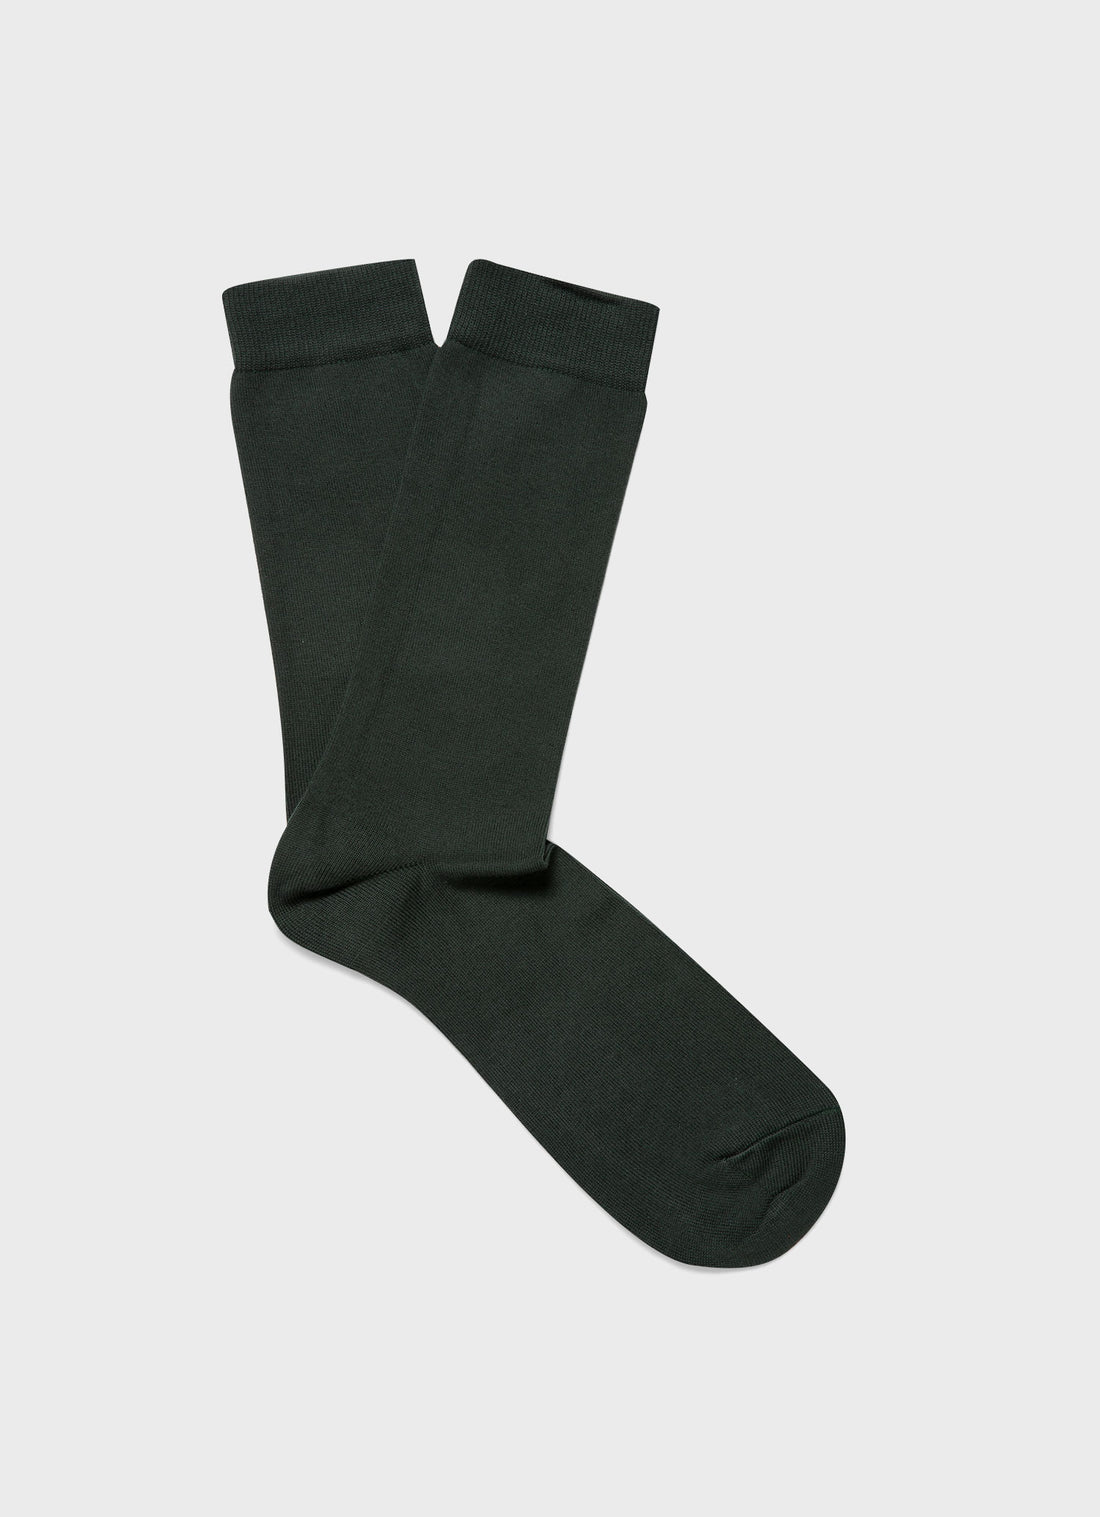 Men's Cotton Sock in Seaweed